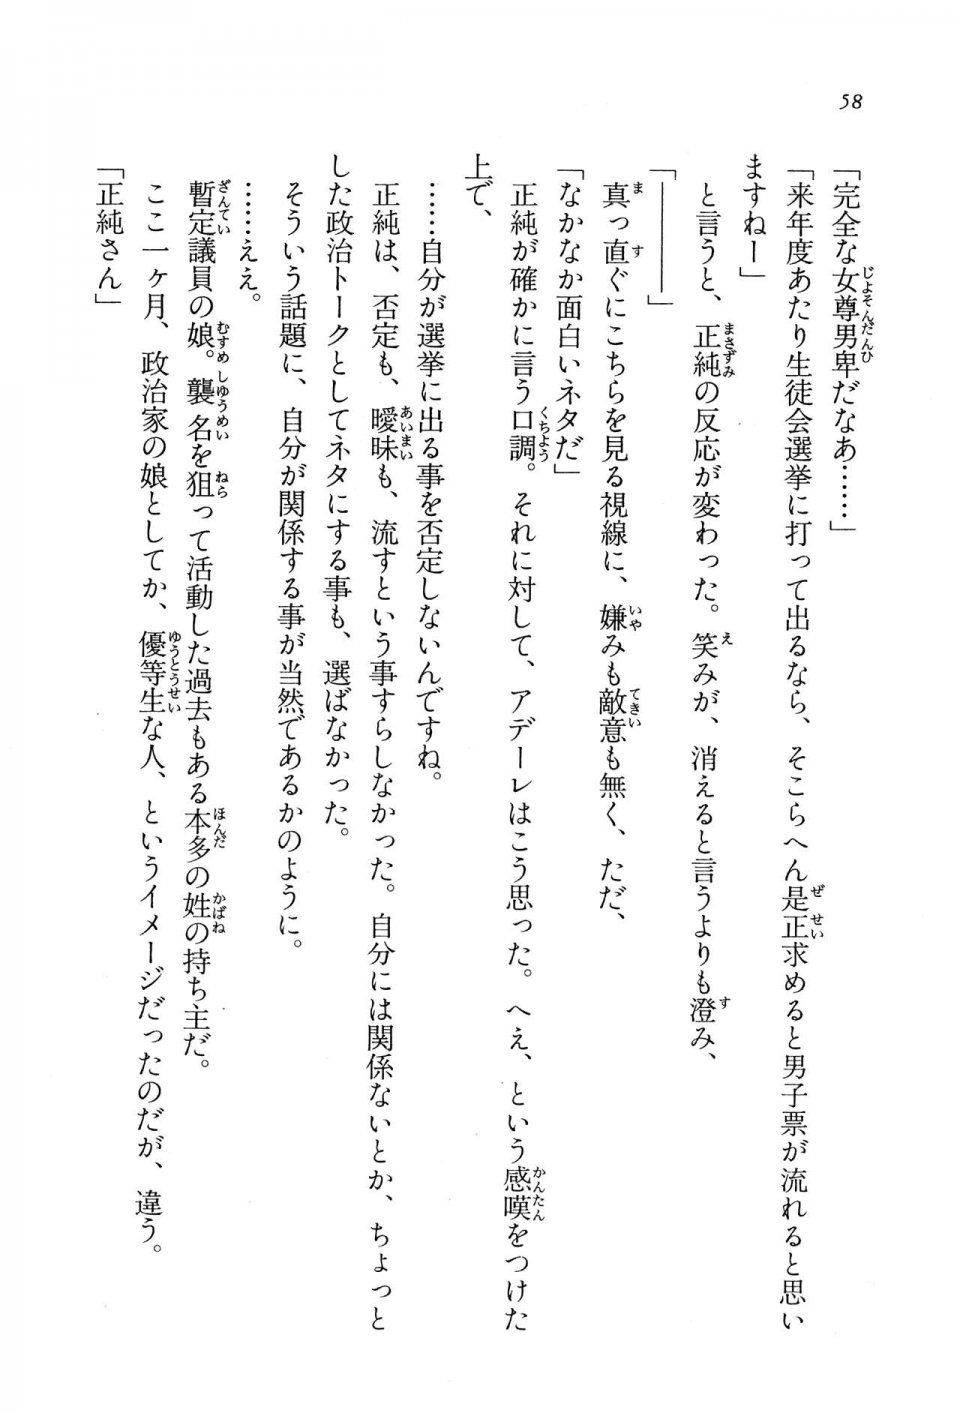 Kyoukai Senjou no Horizon BD Special Mininovel Vol 5(3A) - Photo #62